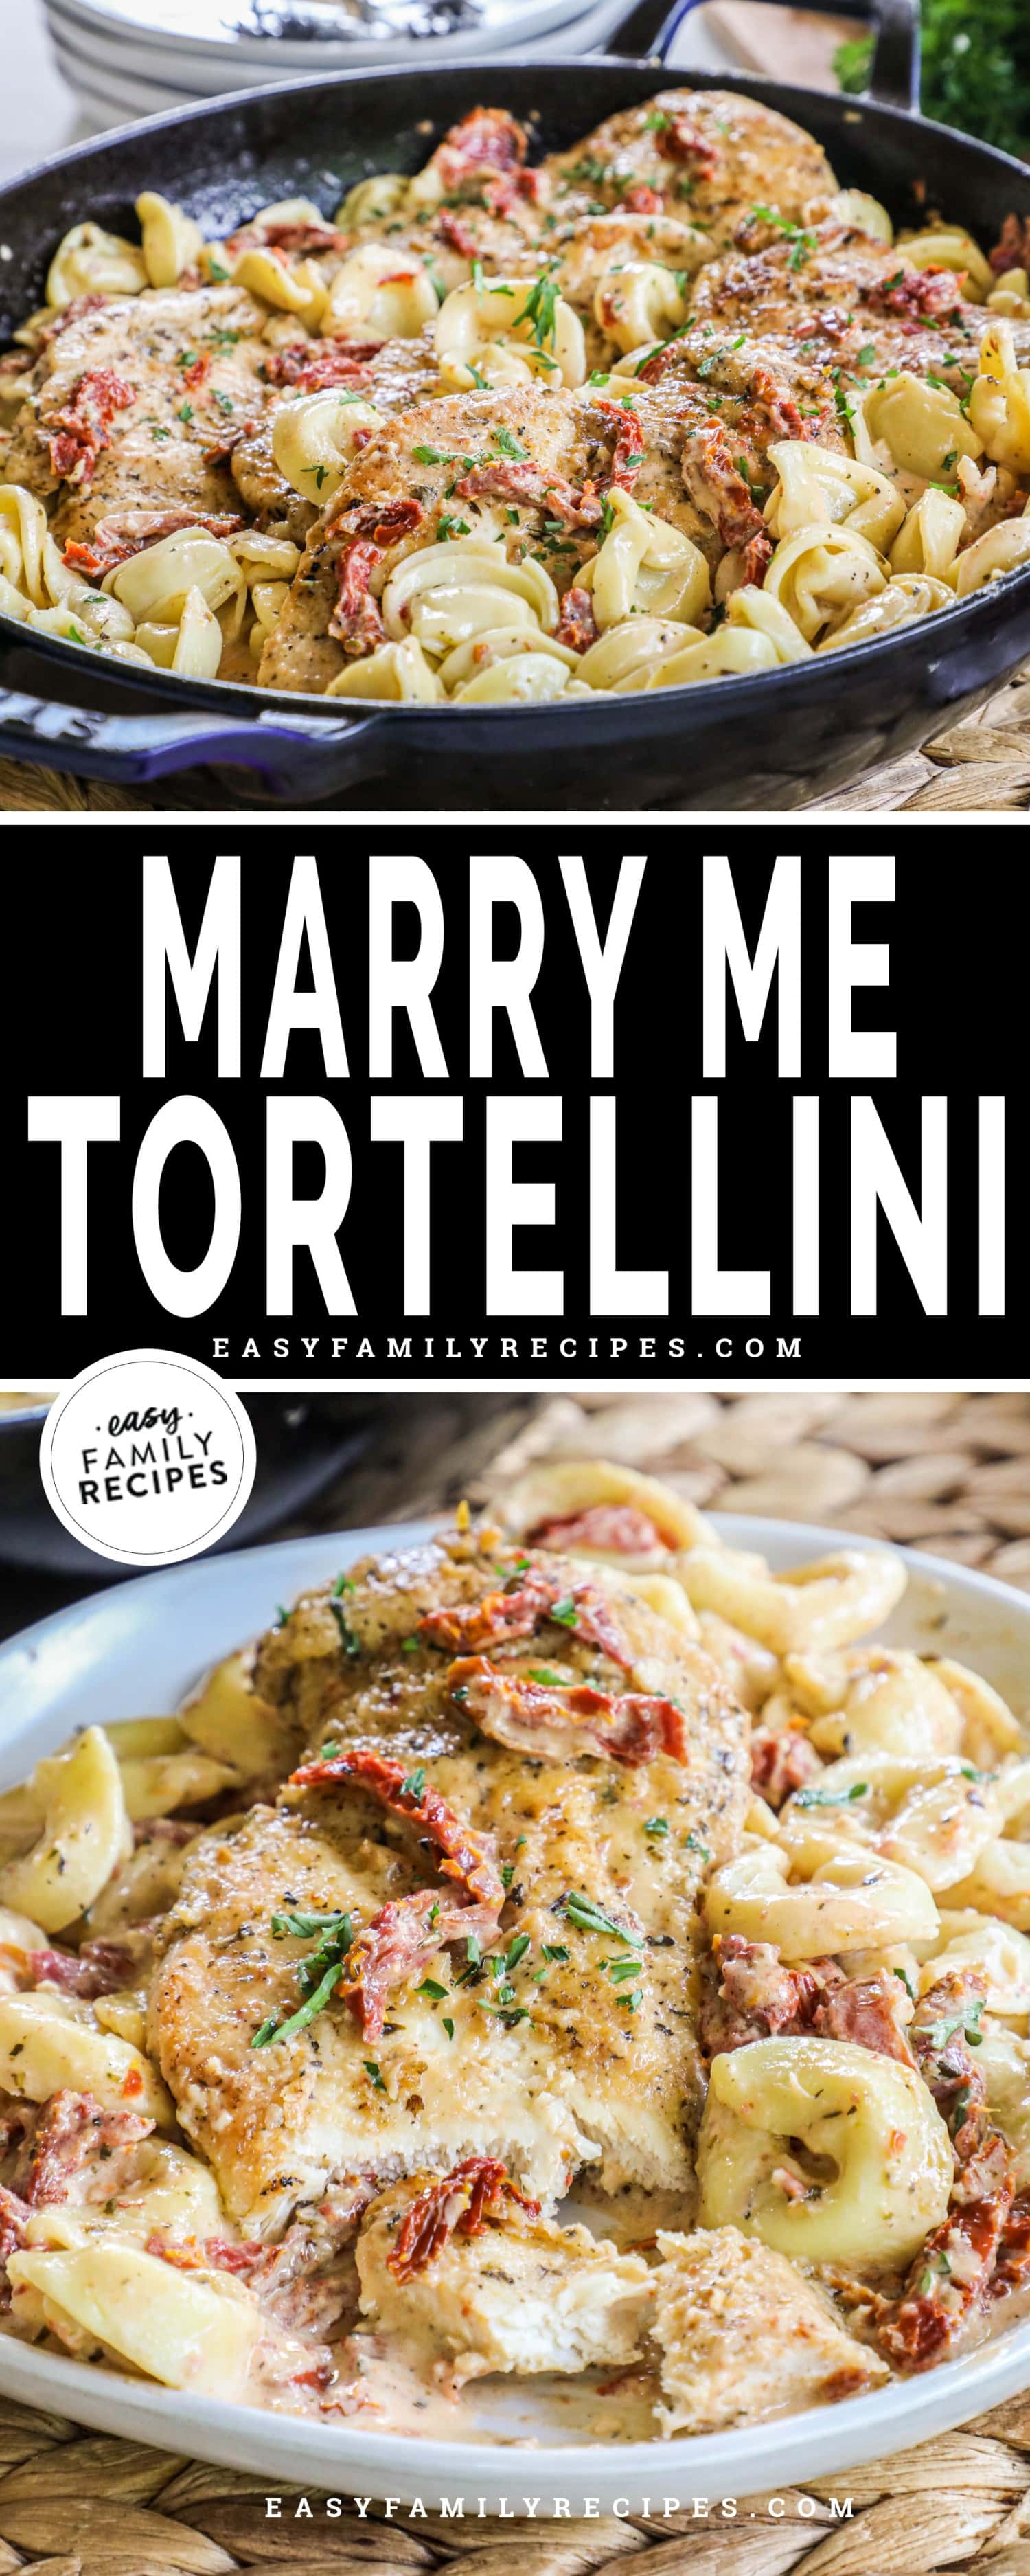 Top photo: marry me chicken tortellini in skillet, bottom photo: marry me chicken on plate